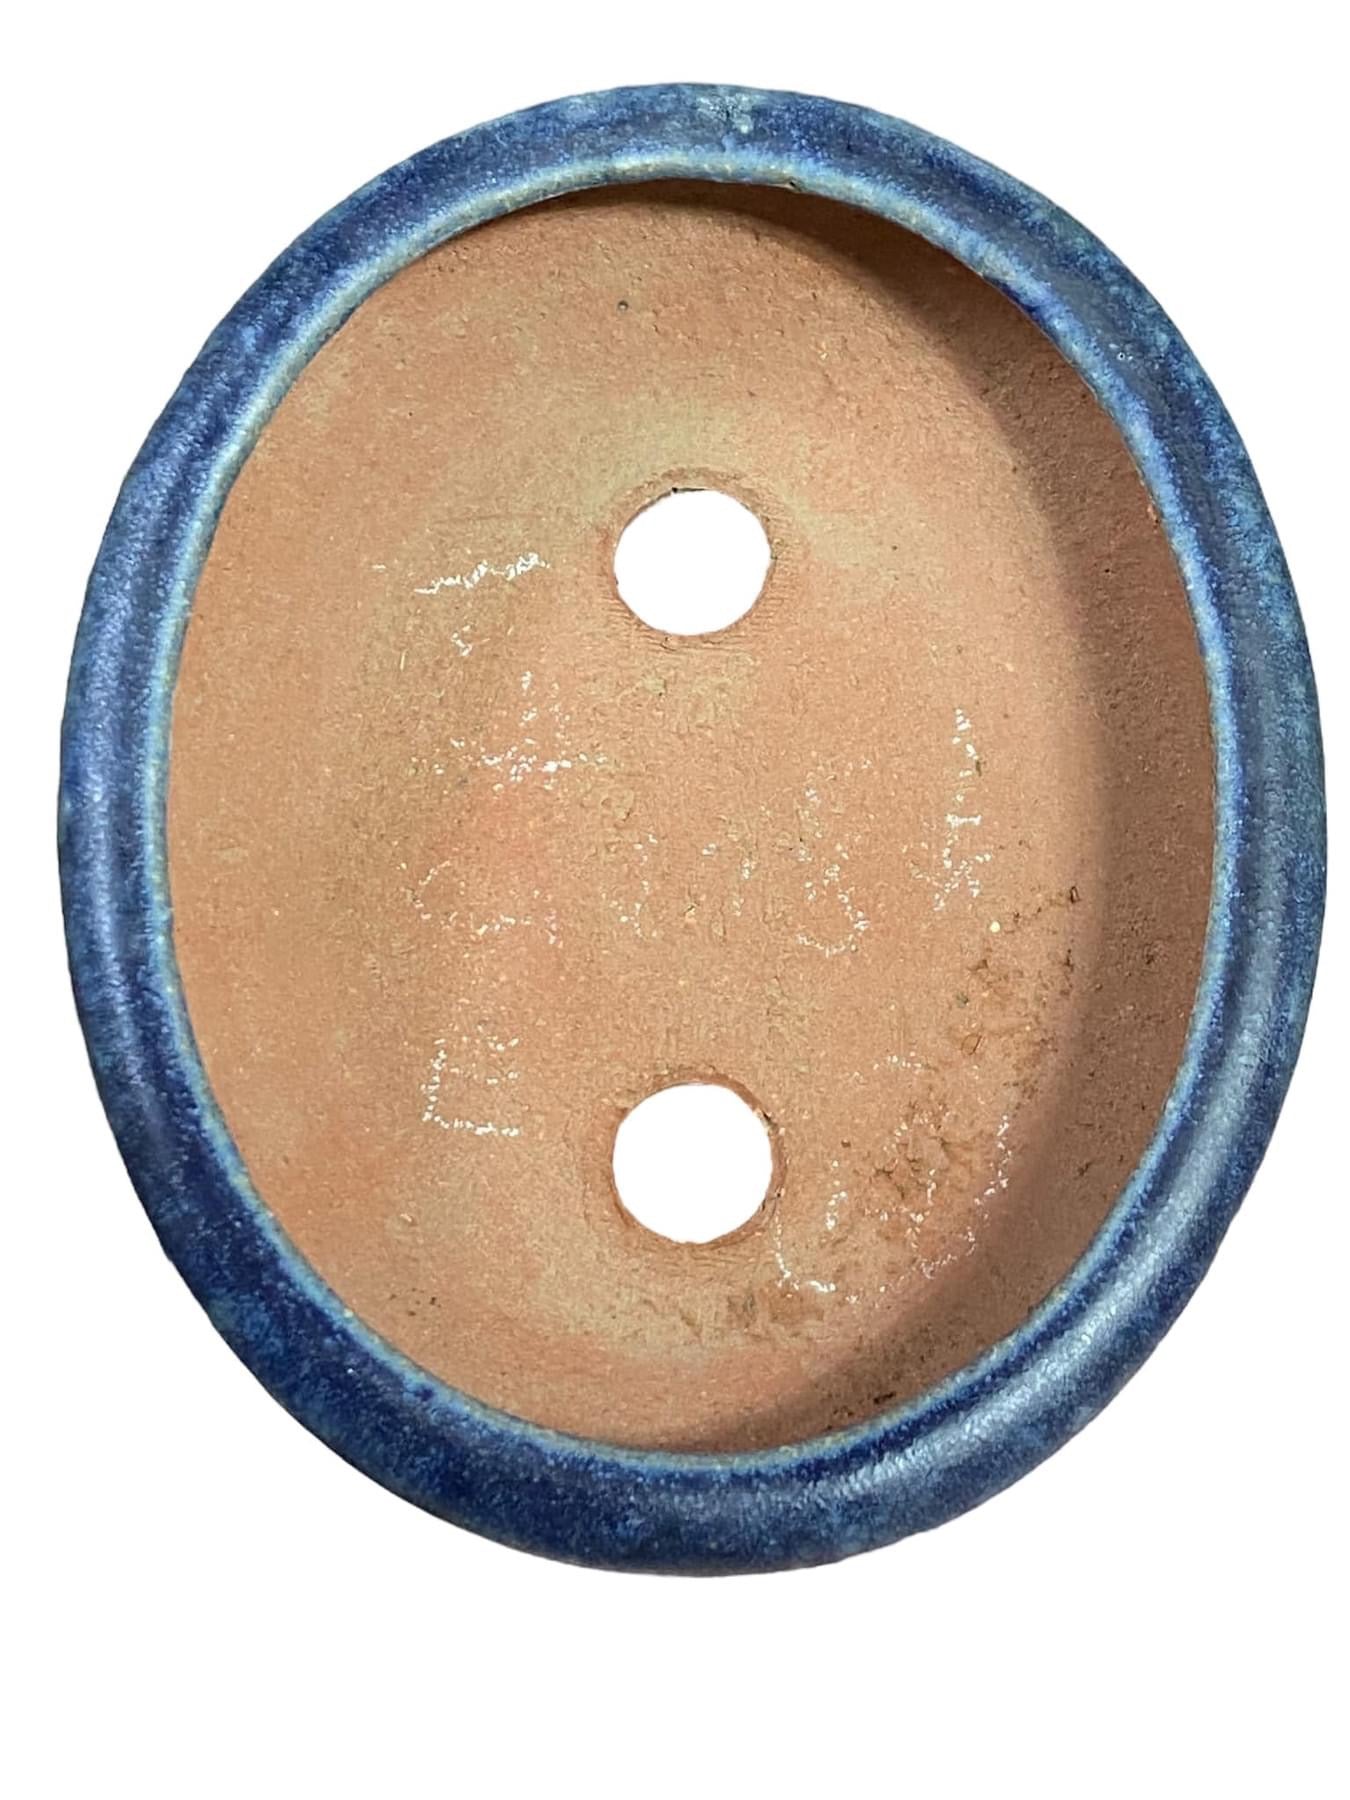 Yozan - Old Blue Namako Glazed Bonsai Pot with Patina (4-11/16” wide)